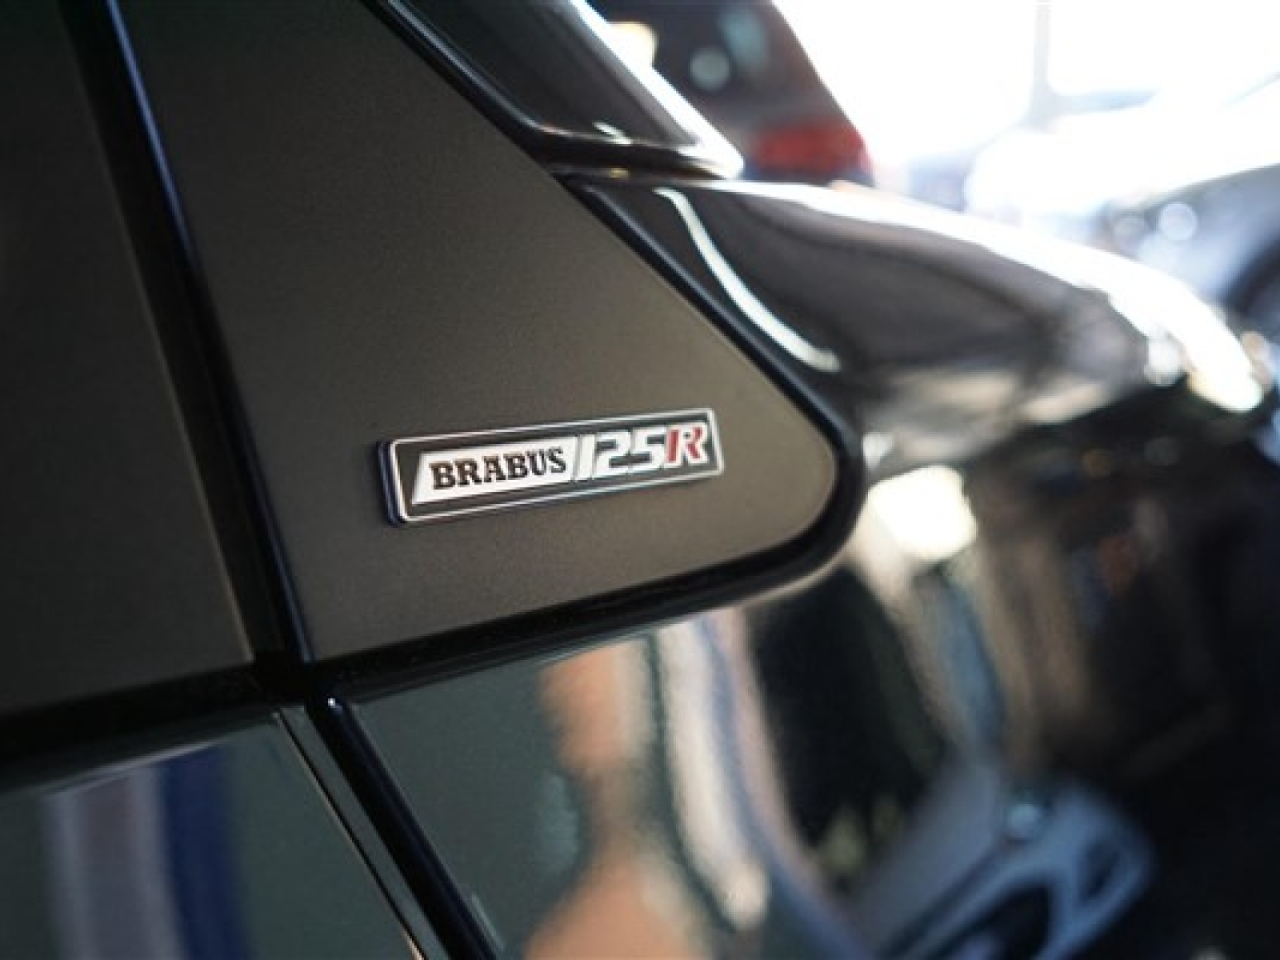 2019 Smart Brabus 125R (1 of 125)